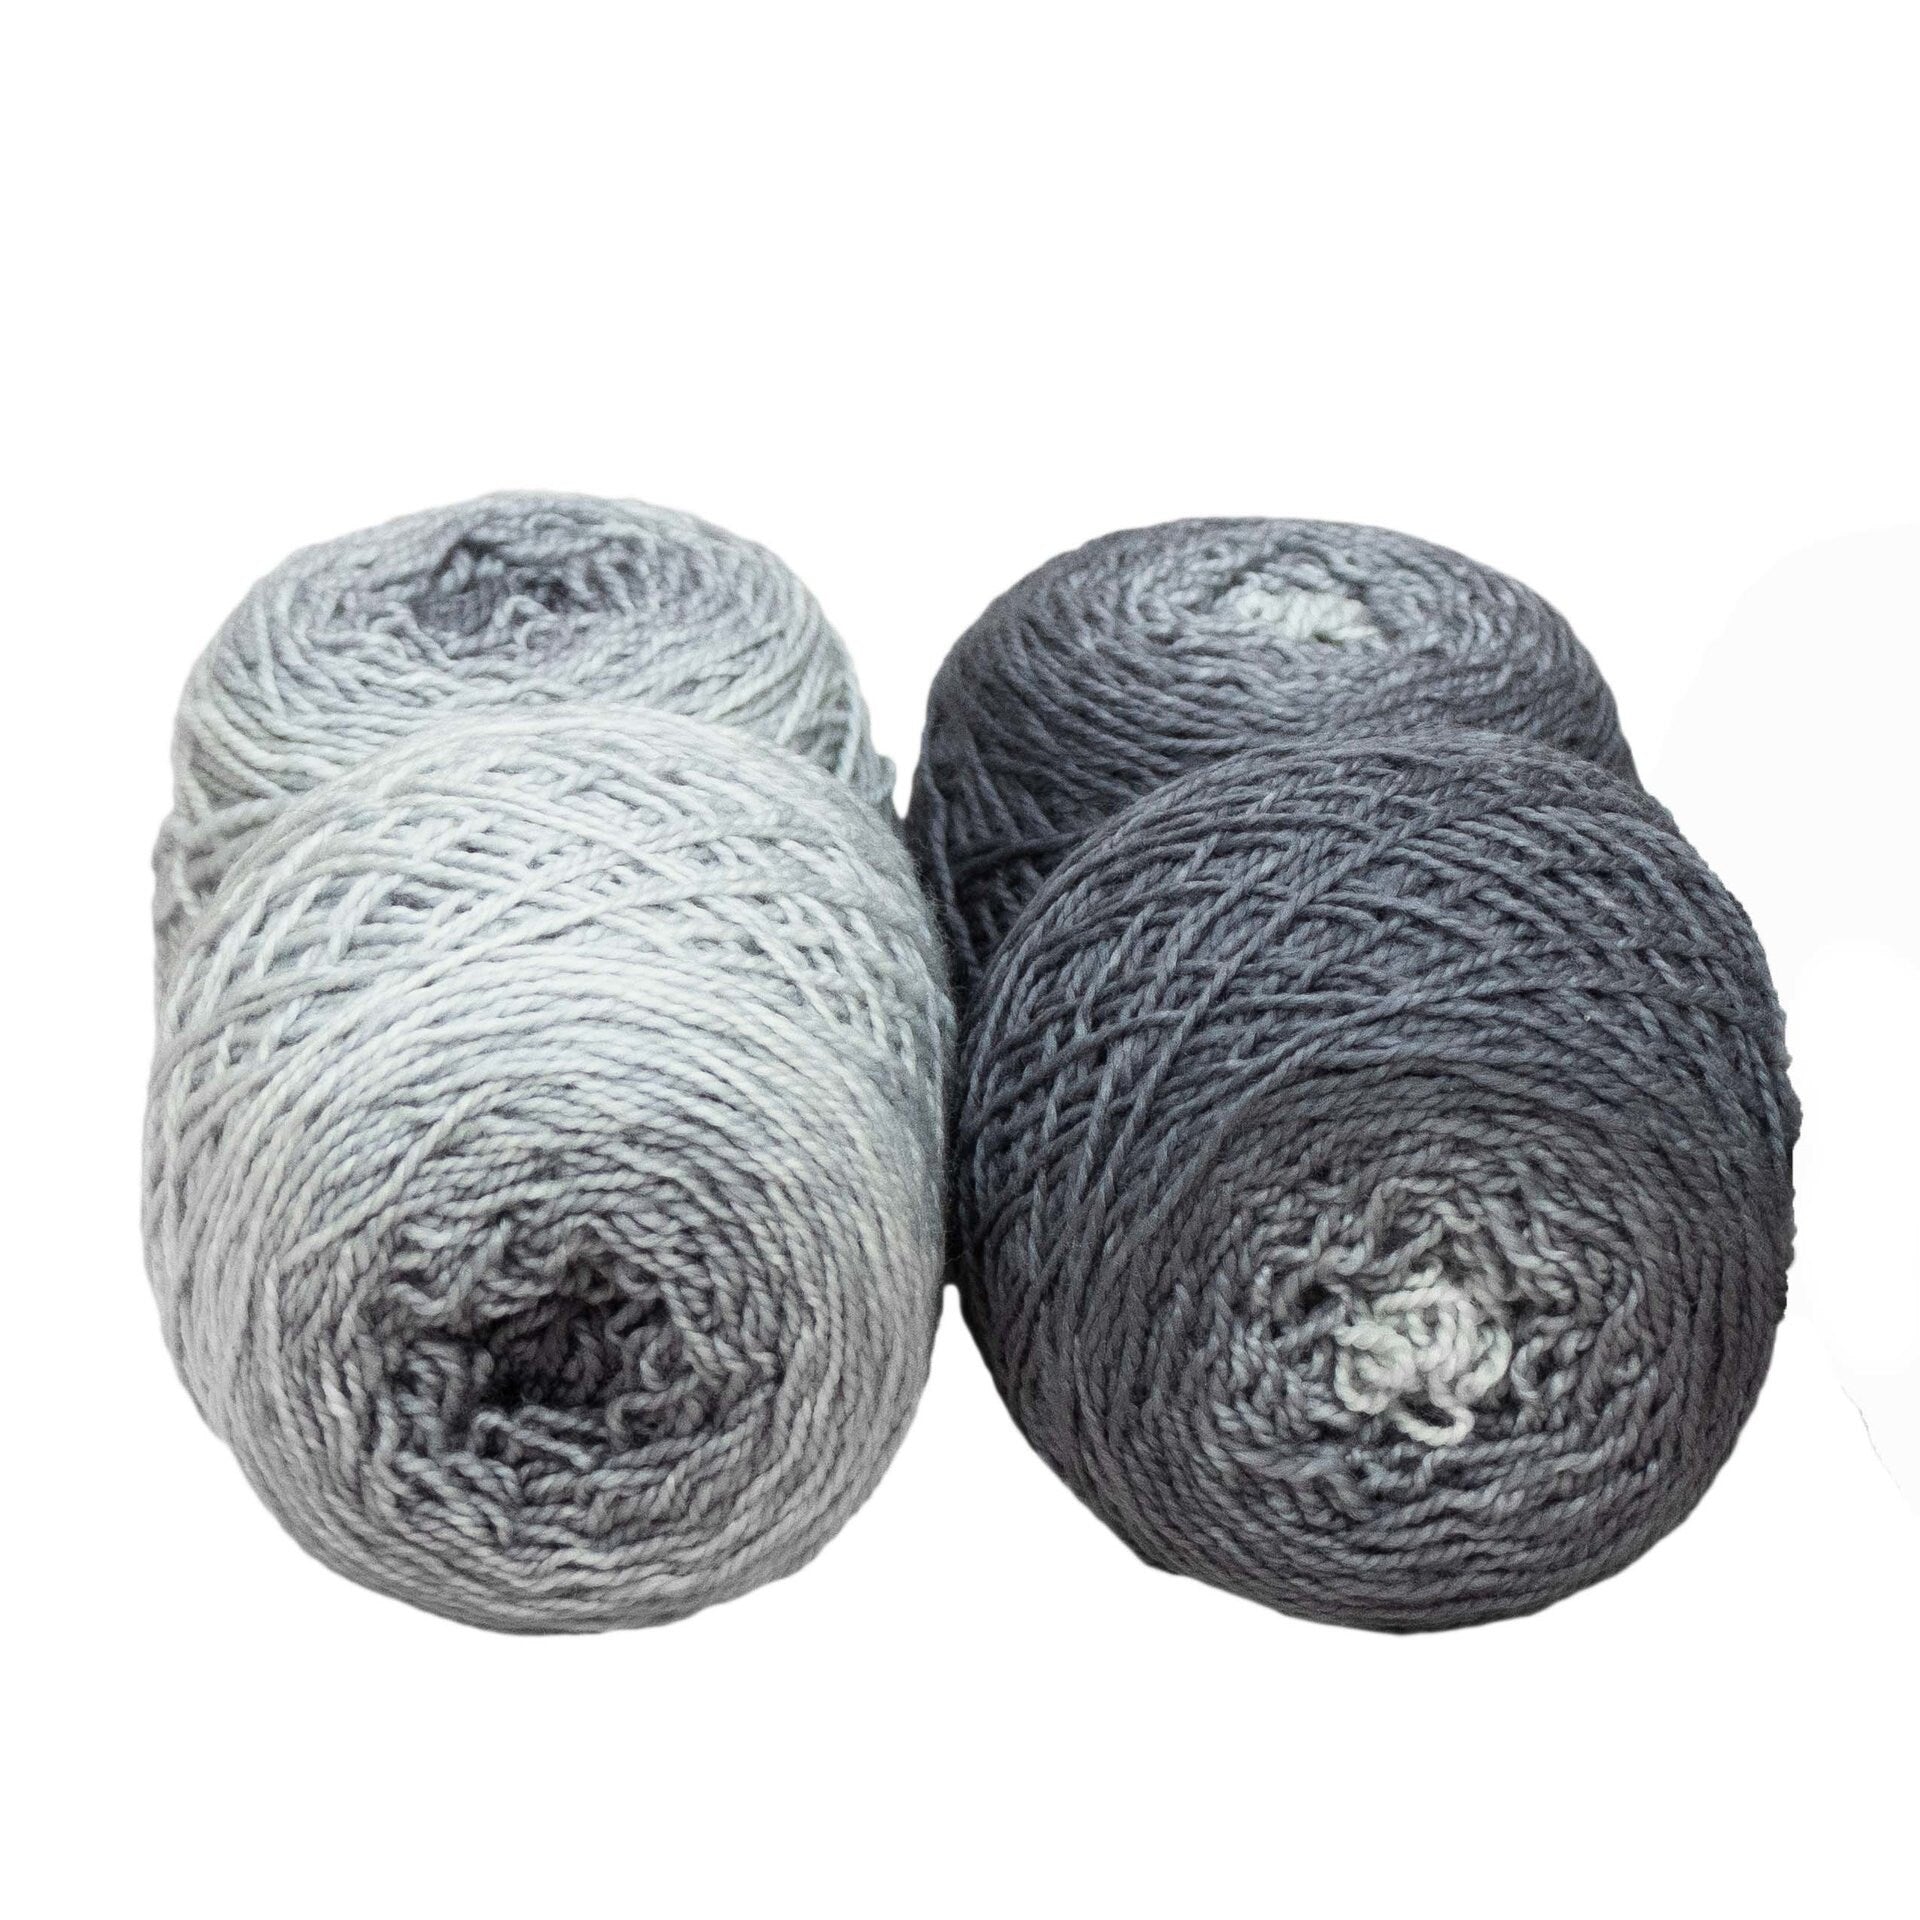 Sock Twins " Crone " - Lleap SW Merino/Nylon Handpainted Gradient Sock Yarn Set